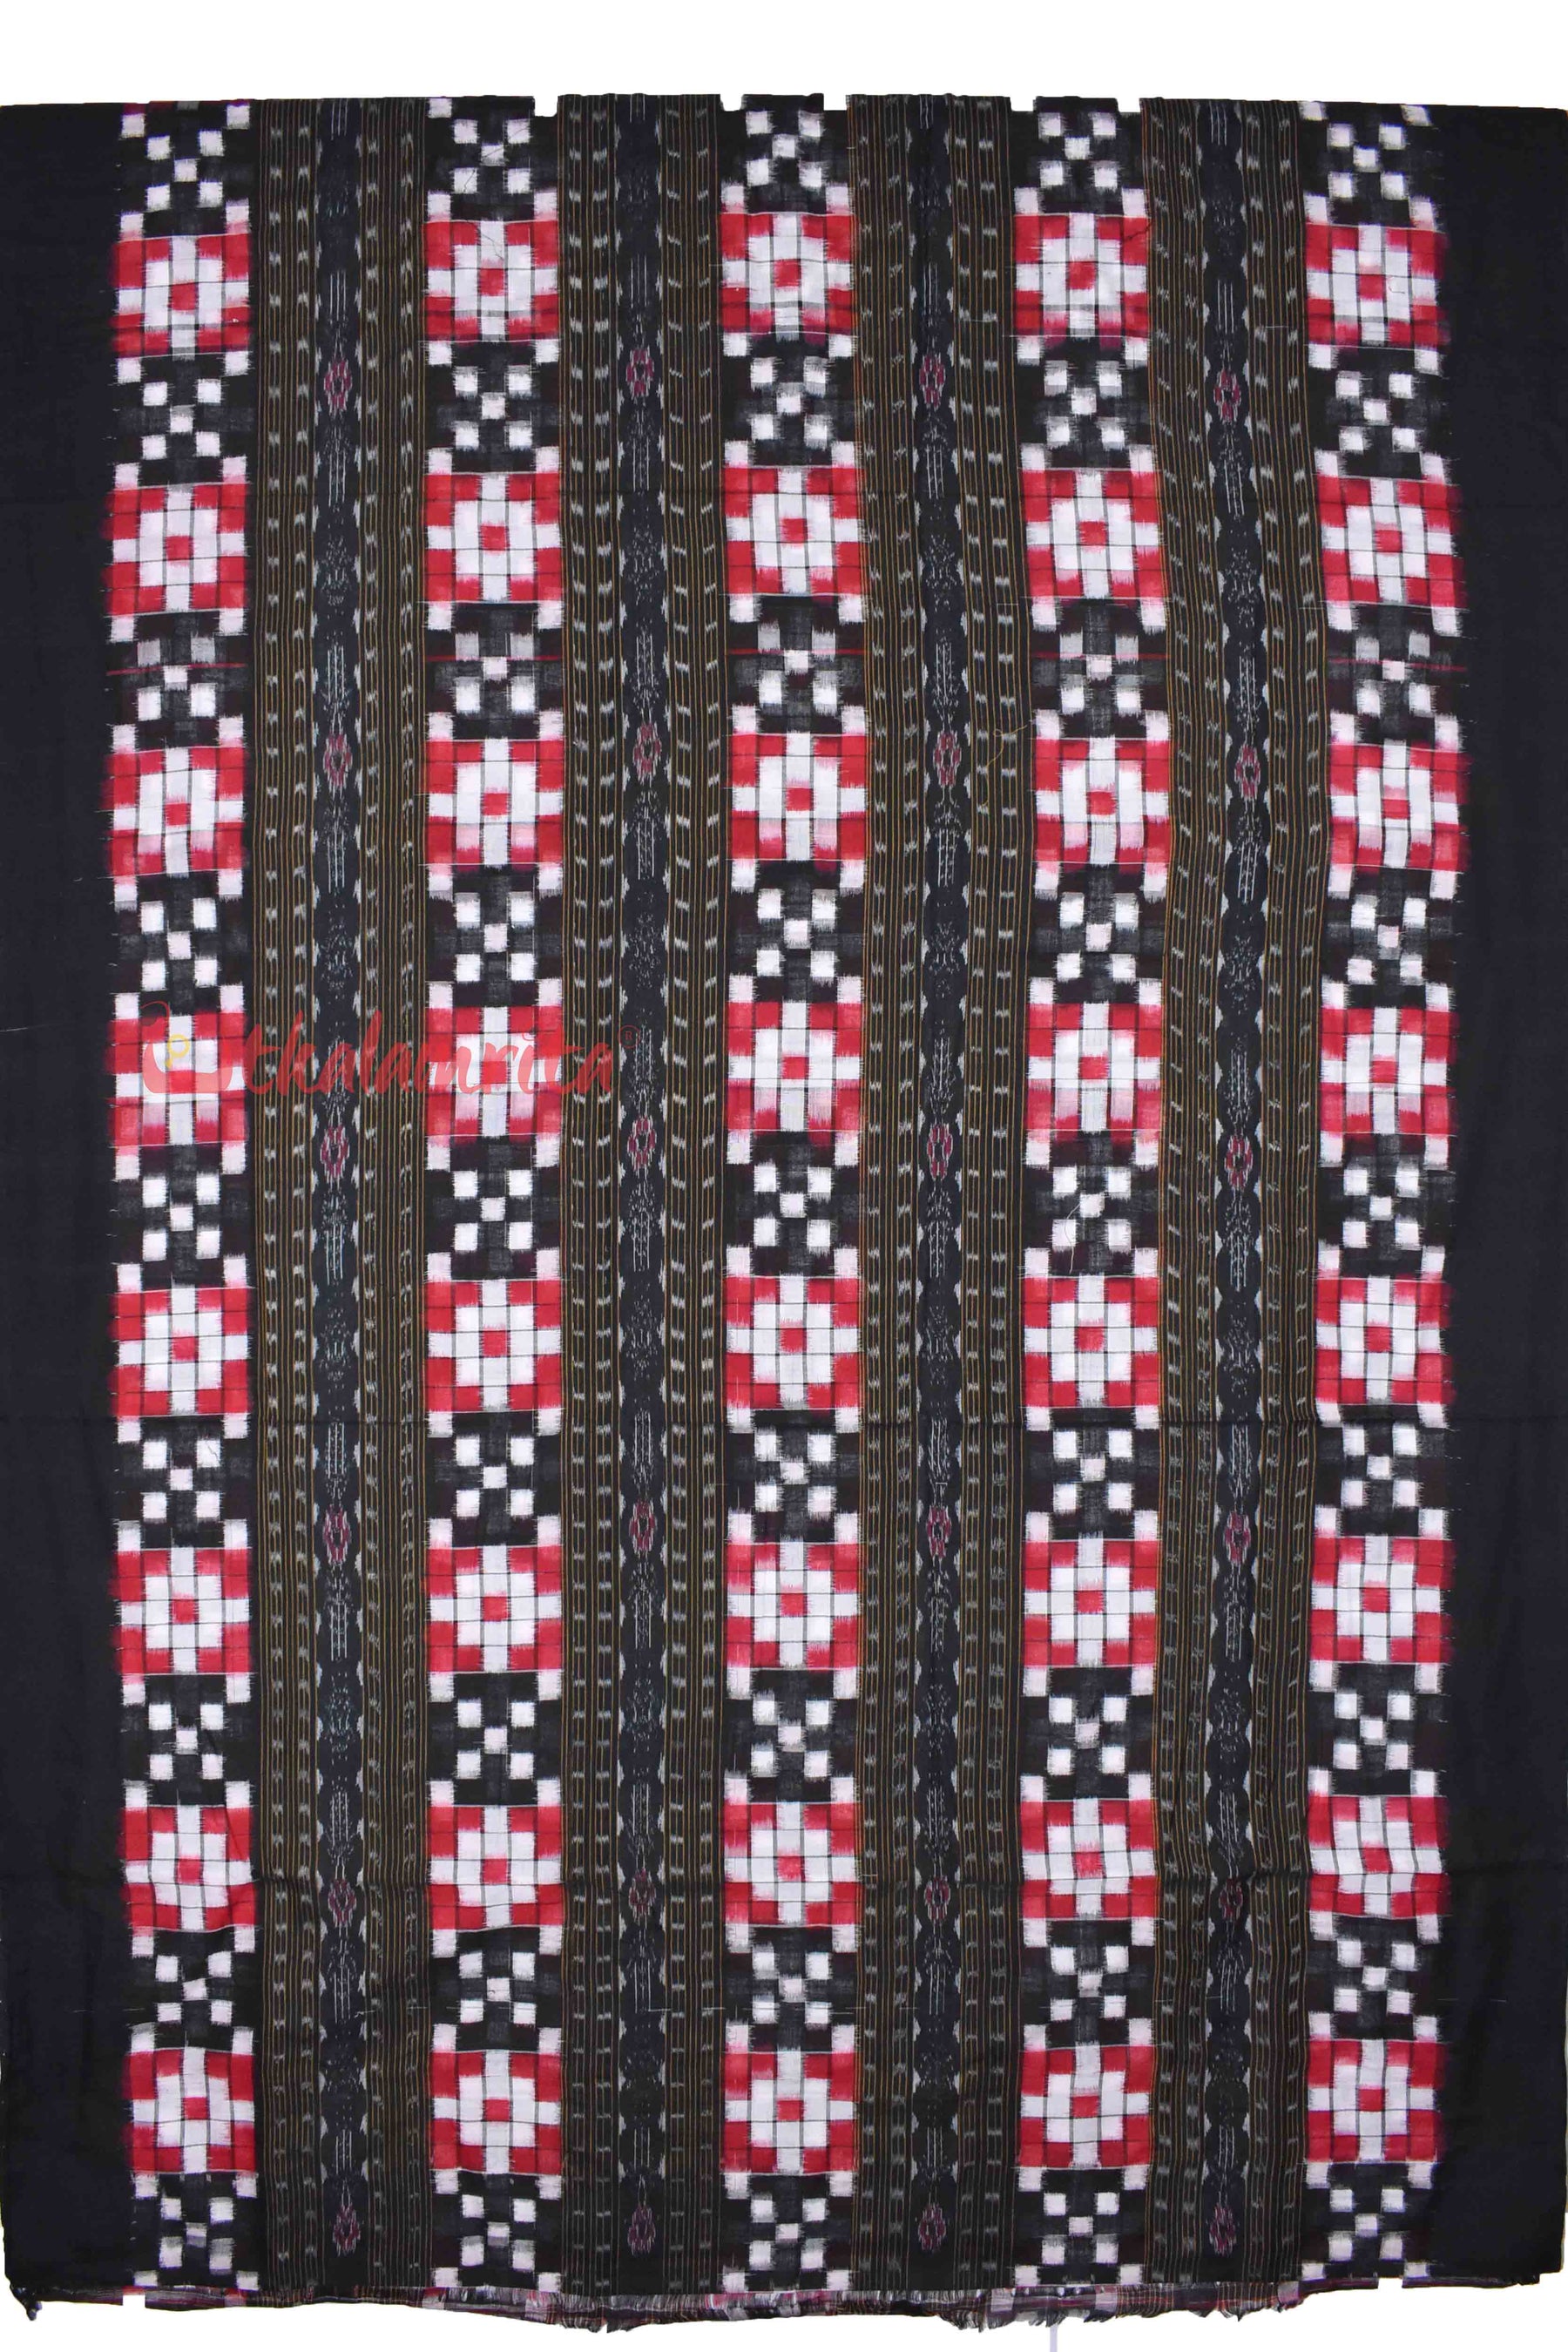 Mini Bichitrapuri Special RBW (Fabric)